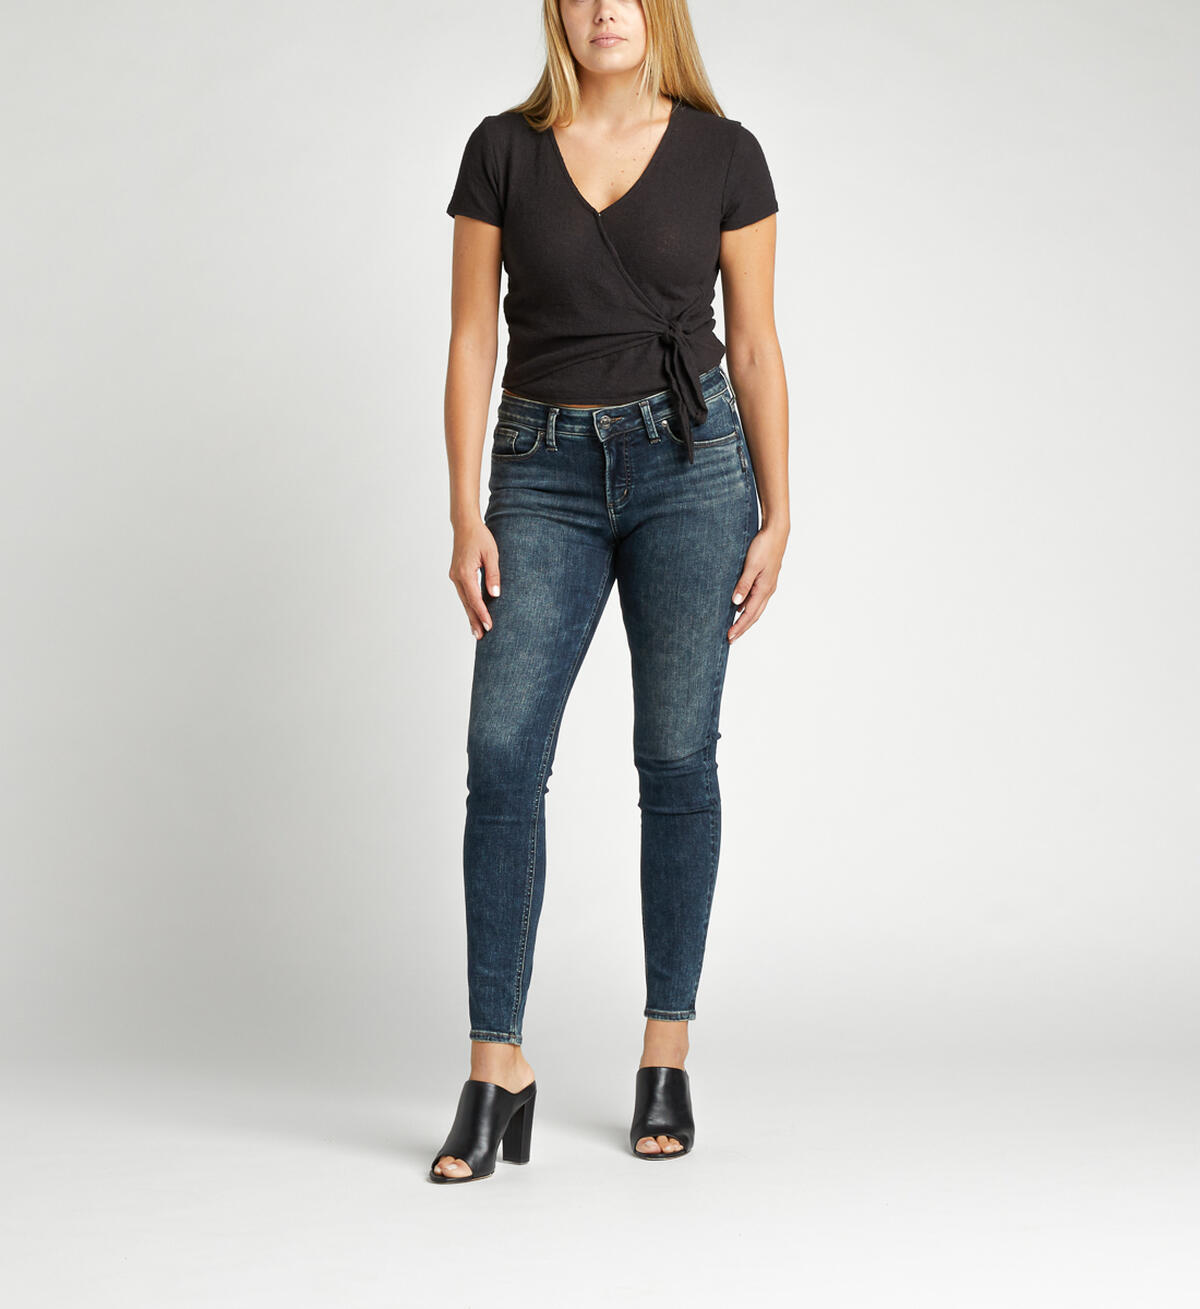 Elyse Mid Rise Skinny Jeans, , hi-res image number 3